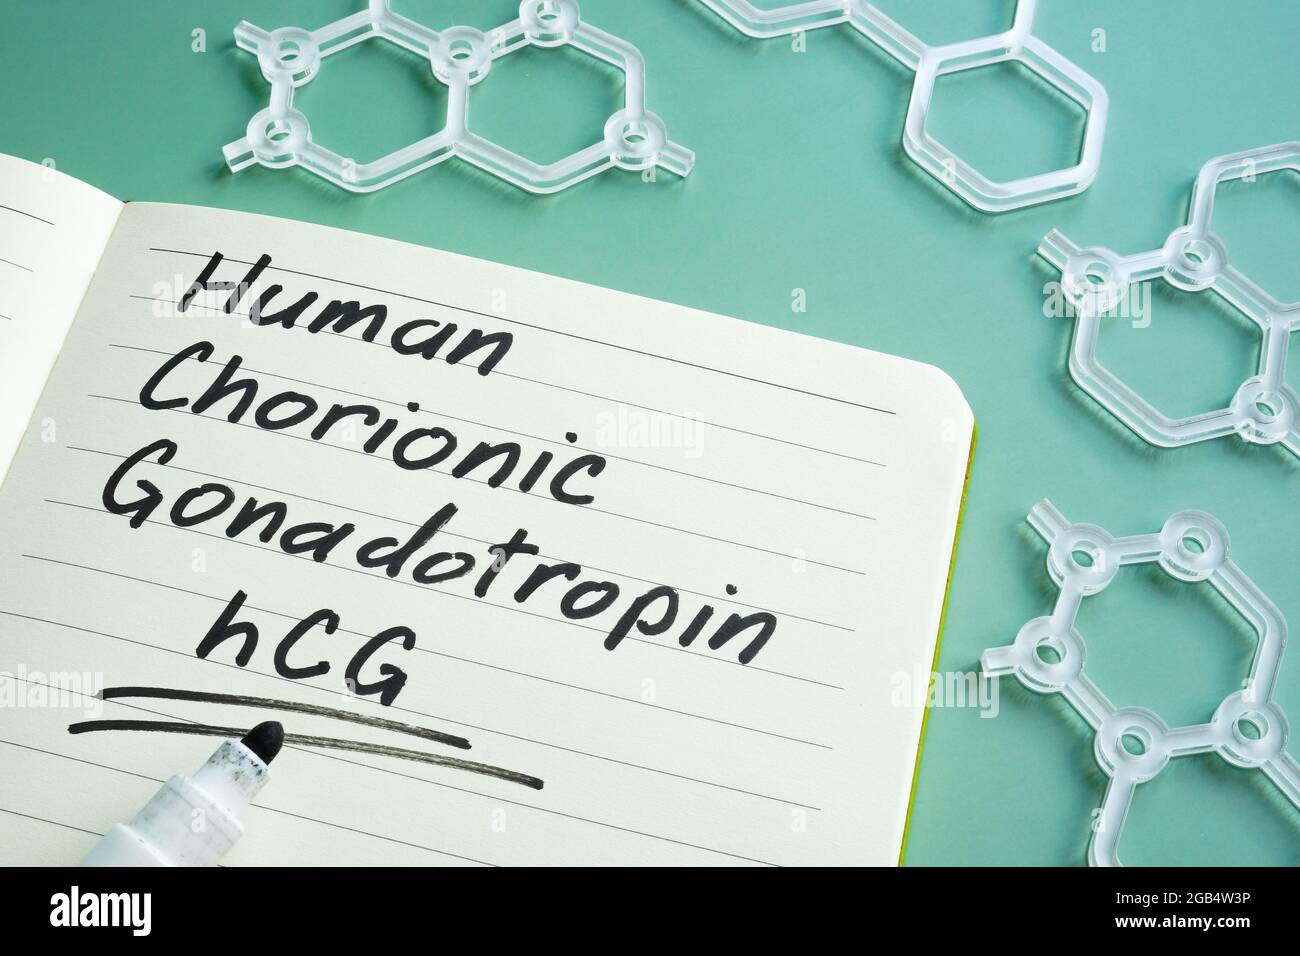 Human Chorionic Gonadotropin hCG written on the page. Stock Photo